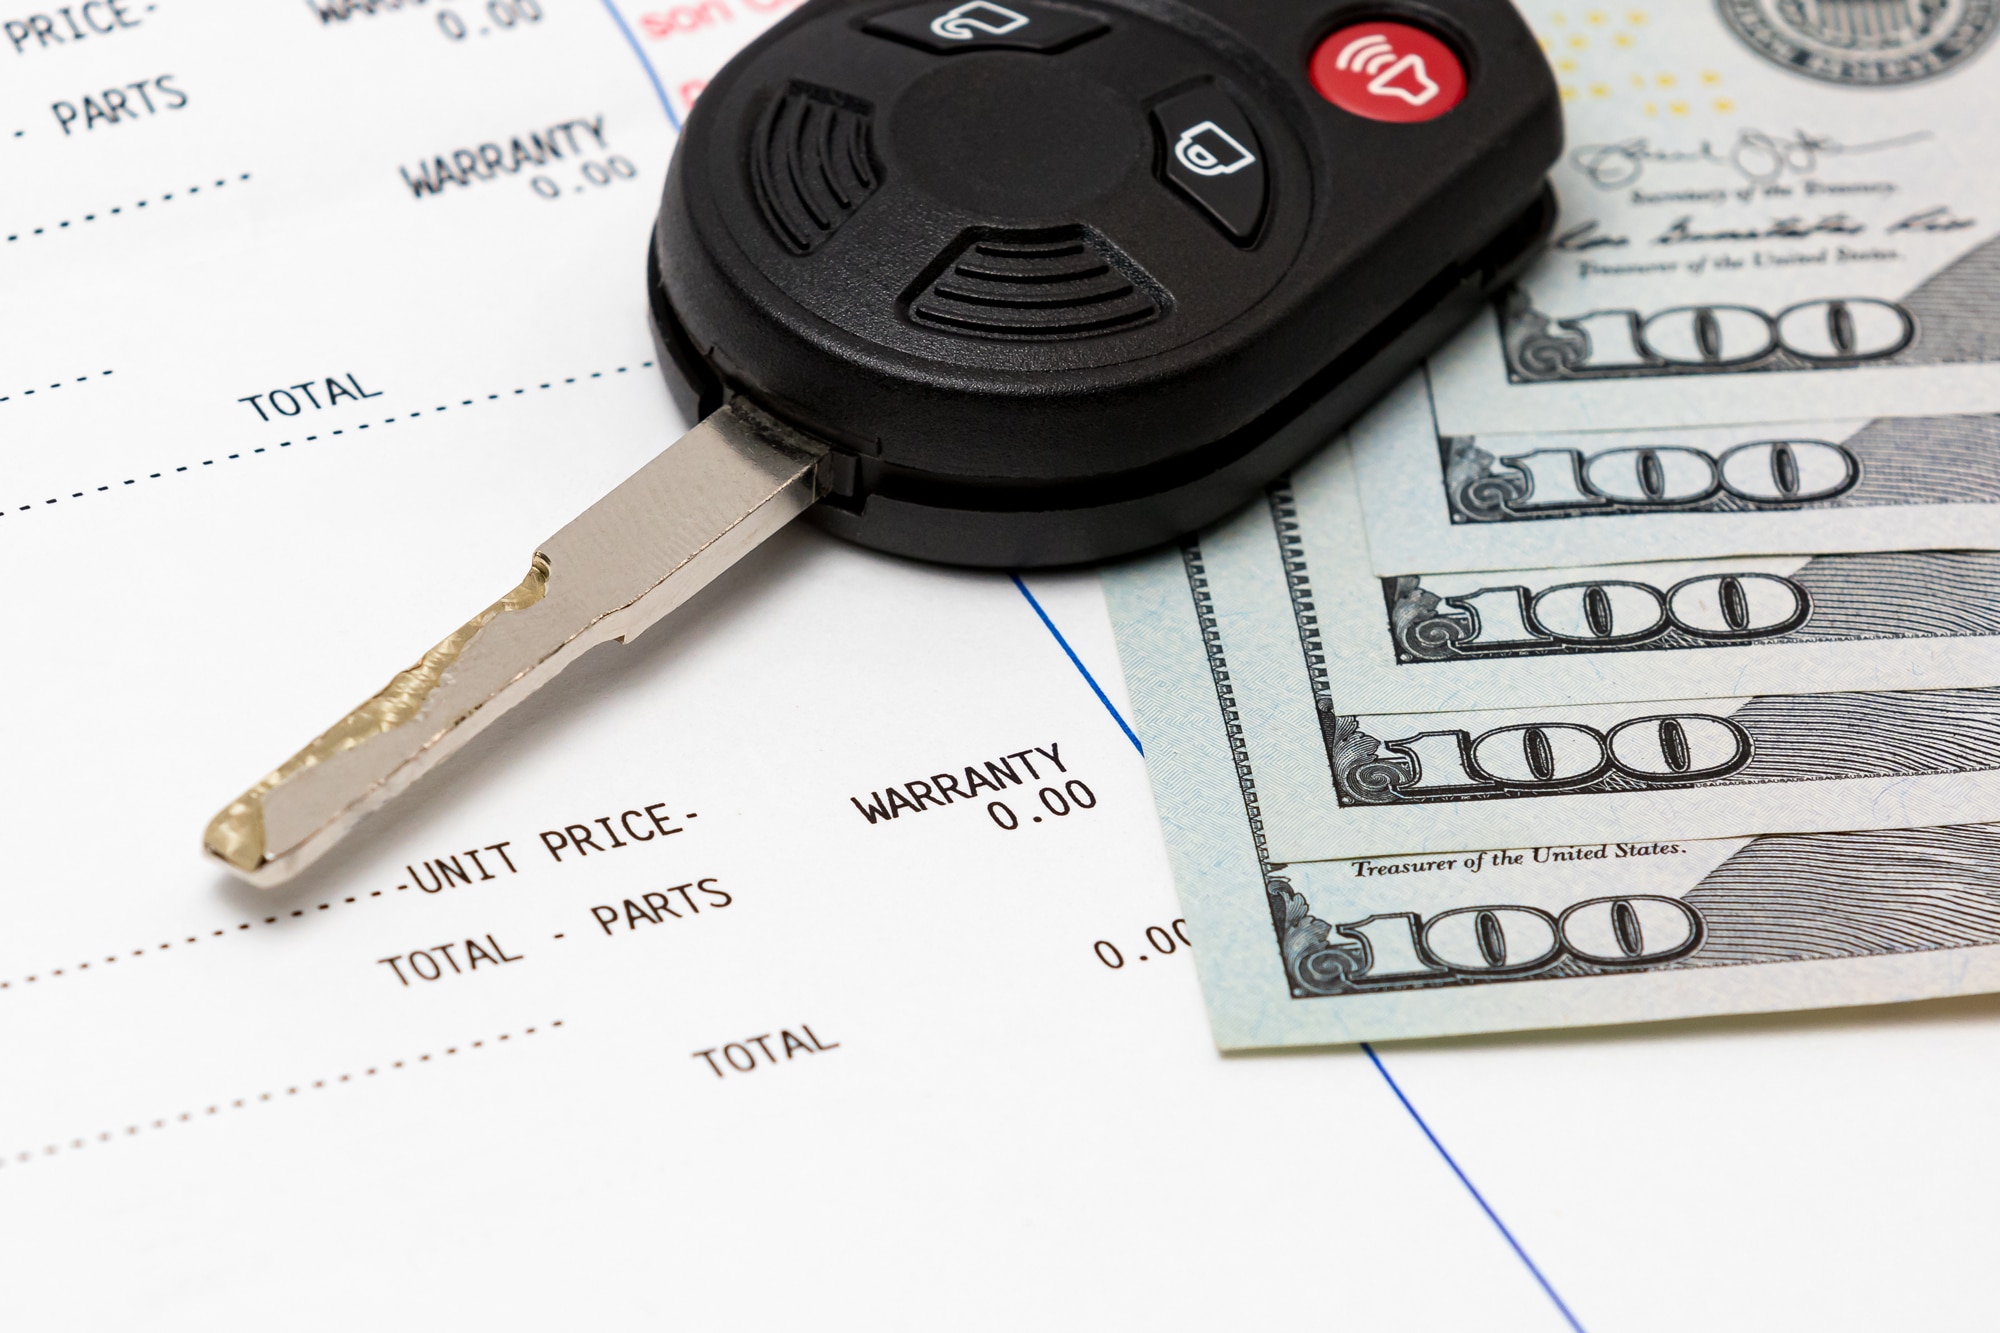 Car key, vehicle warranty repair bill and $100 bills